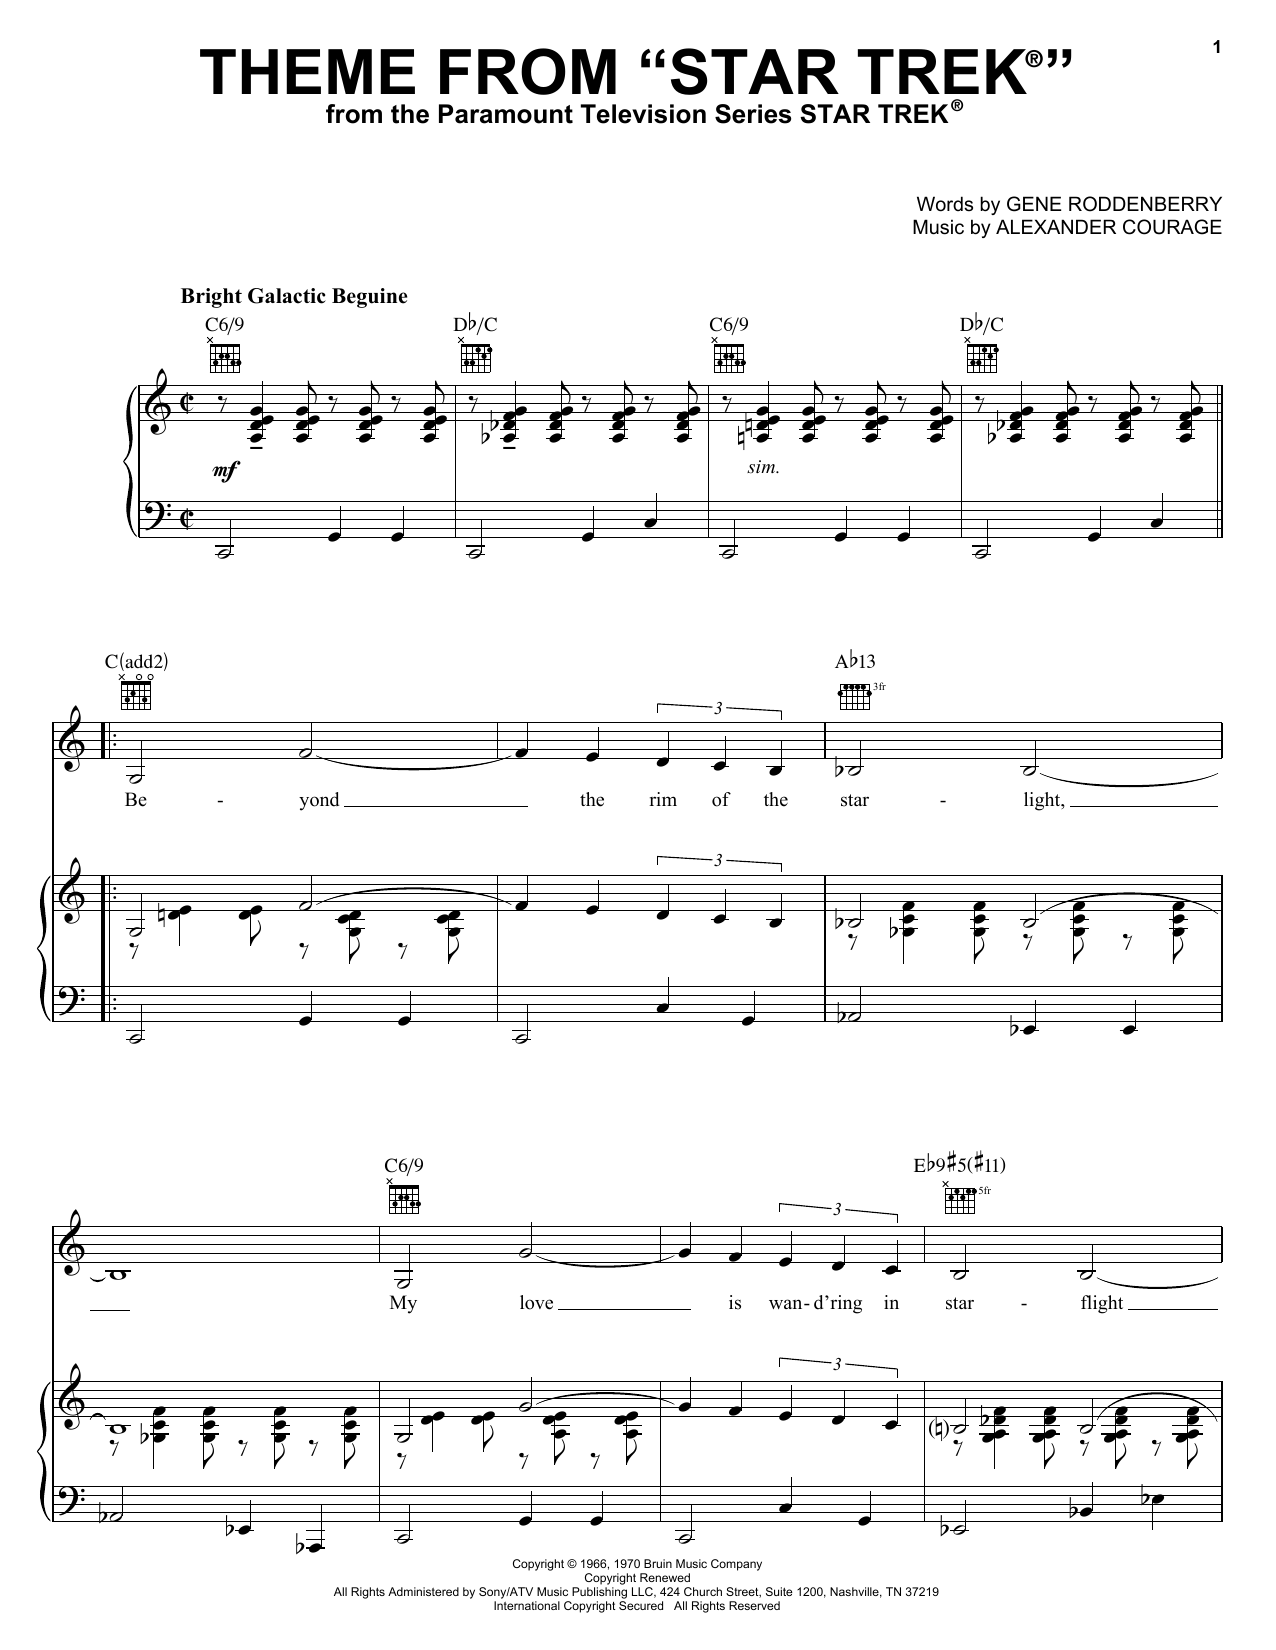 Gene Roddenberry Theme from Star Trek(R) Sheet Music Notes & Chords for Easy Guitar Tab - Download or Print PDF